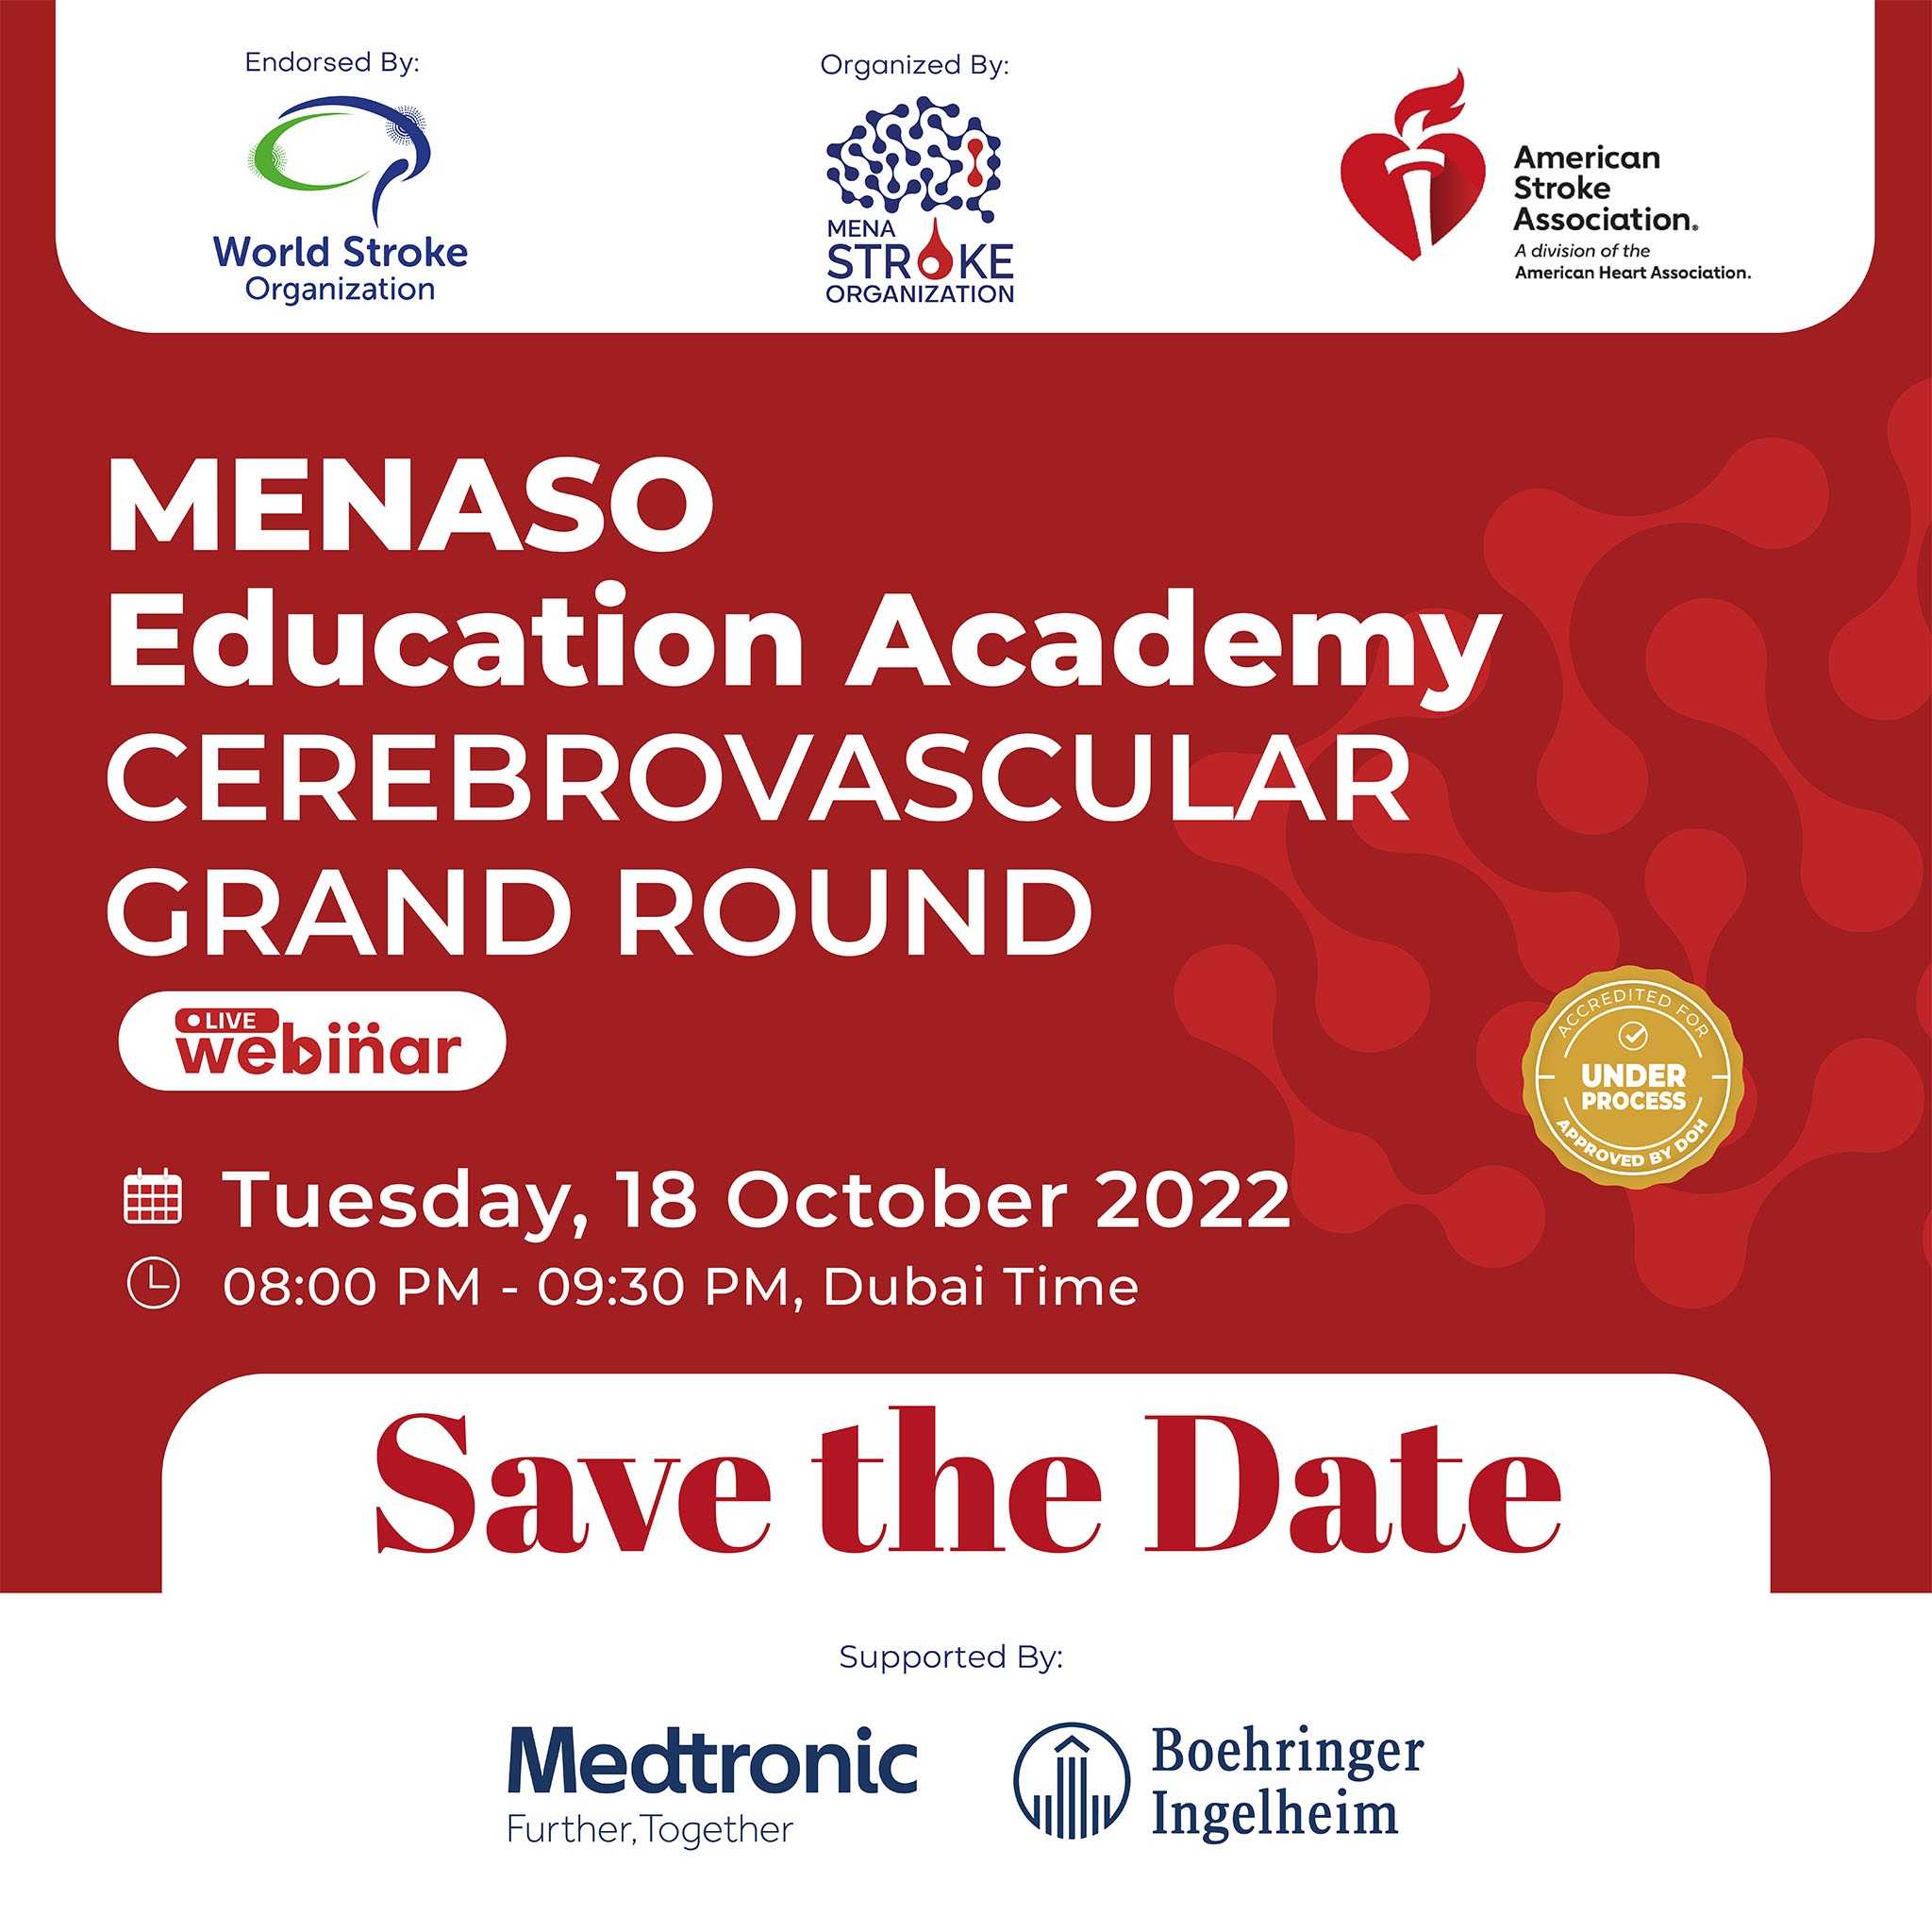 MENASO Education Academy Cerebrovascular Grand Round